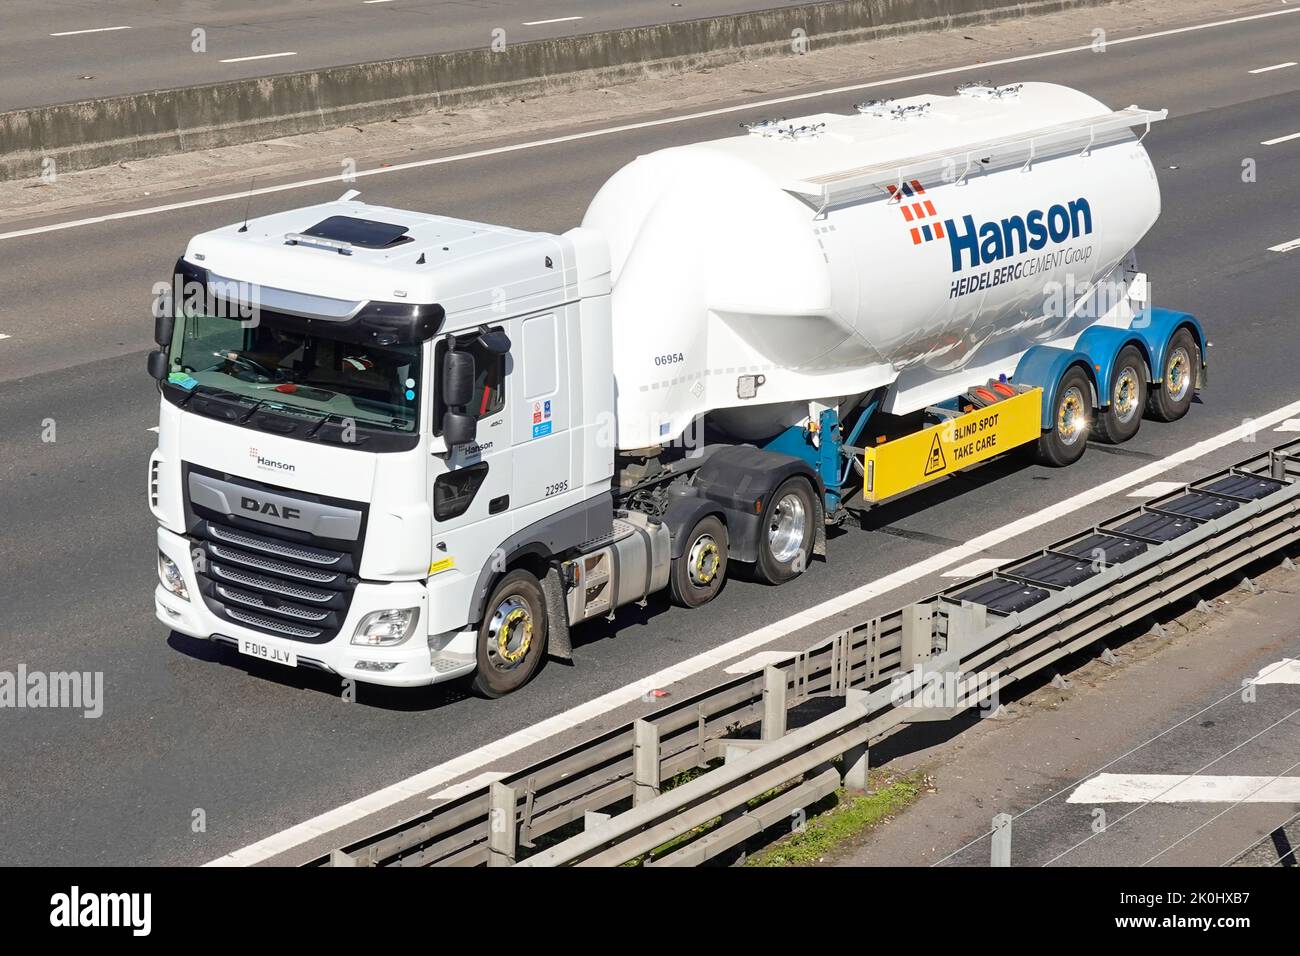 Logo & blind spot warning on side of Hanson Heidelberg bulk cement supply chain business group tanker trailer & hgv lorry truck driving on UK motorway Stock Photo